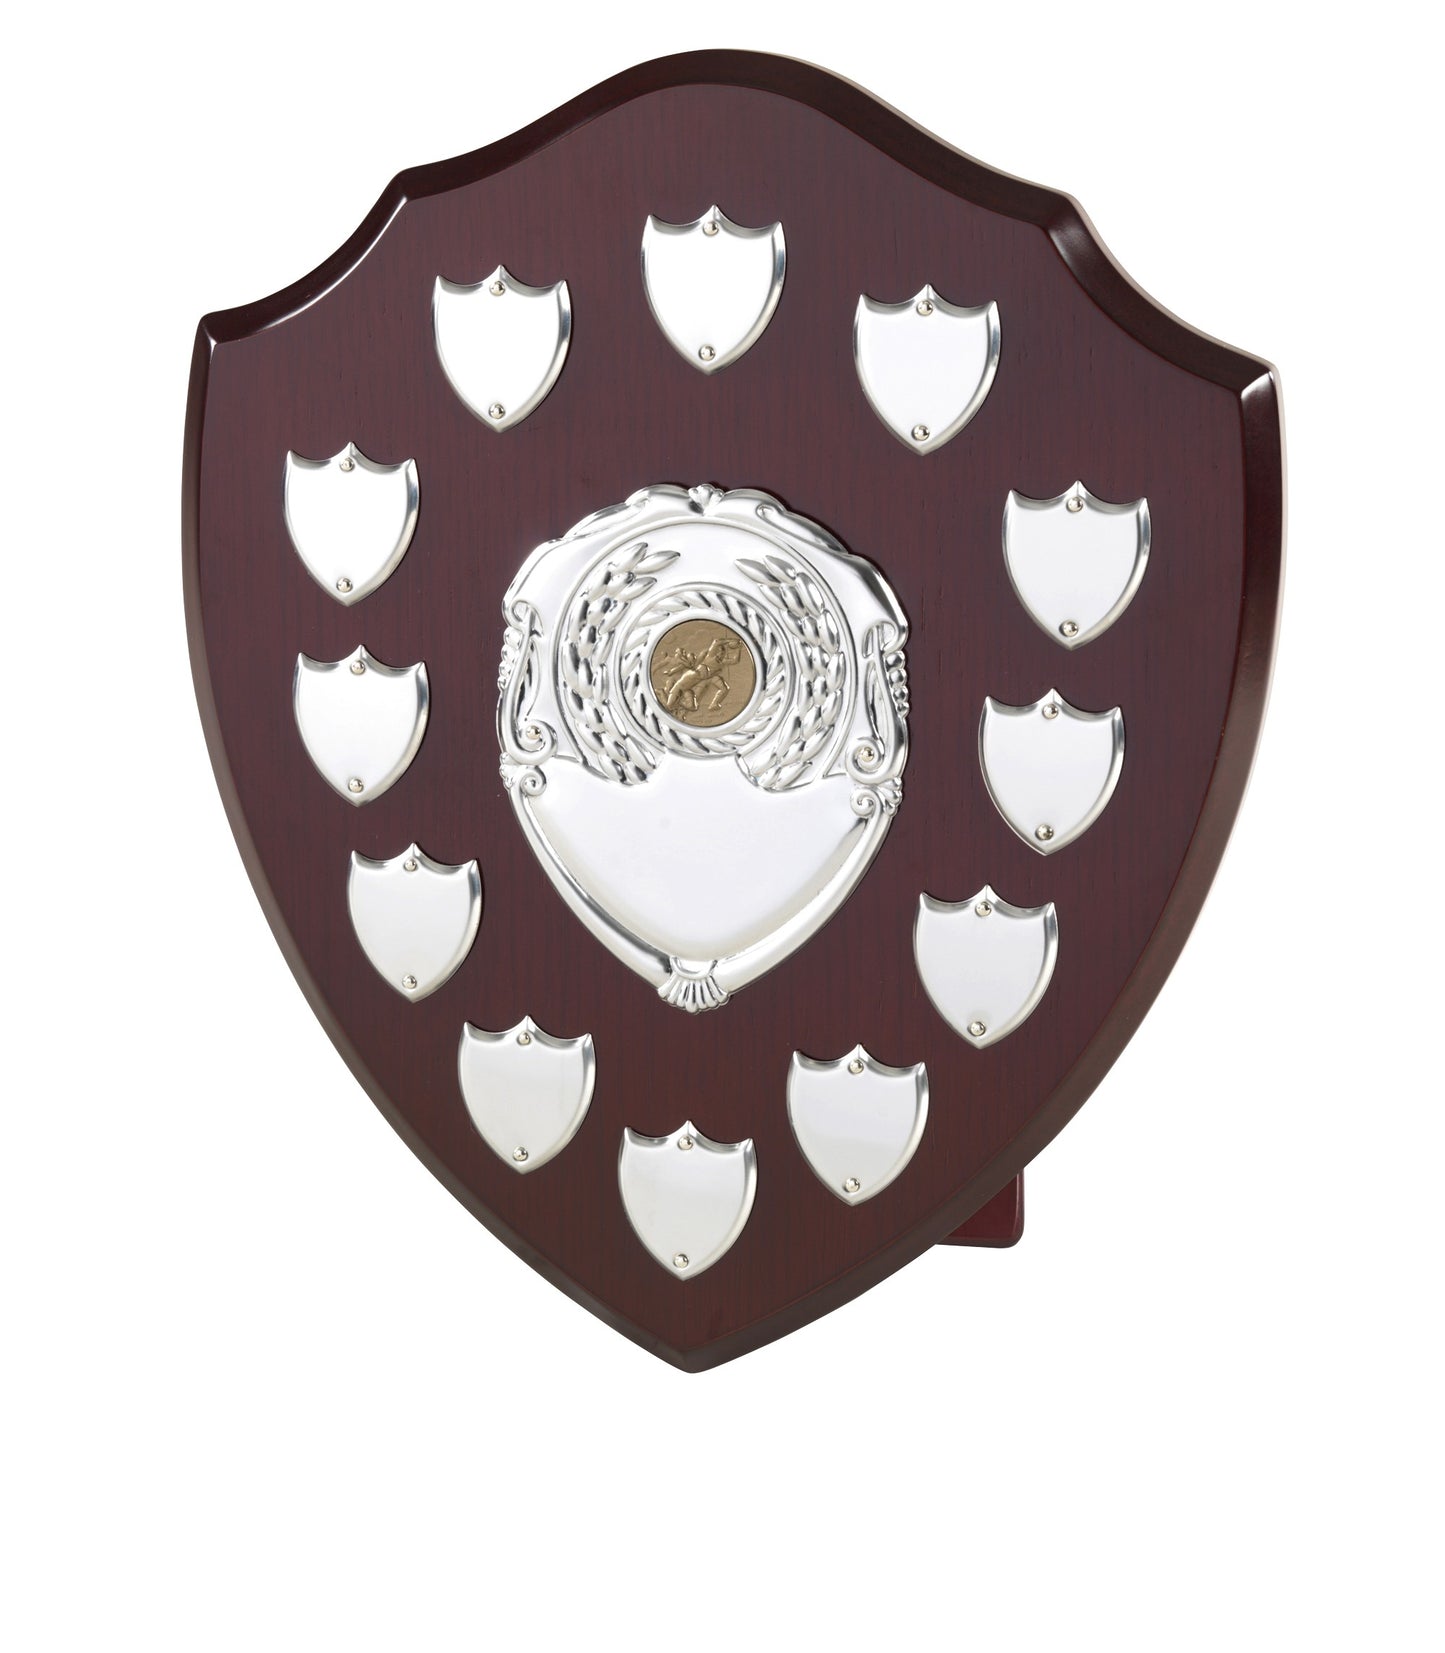 30cm Shield with 12 Side Shields